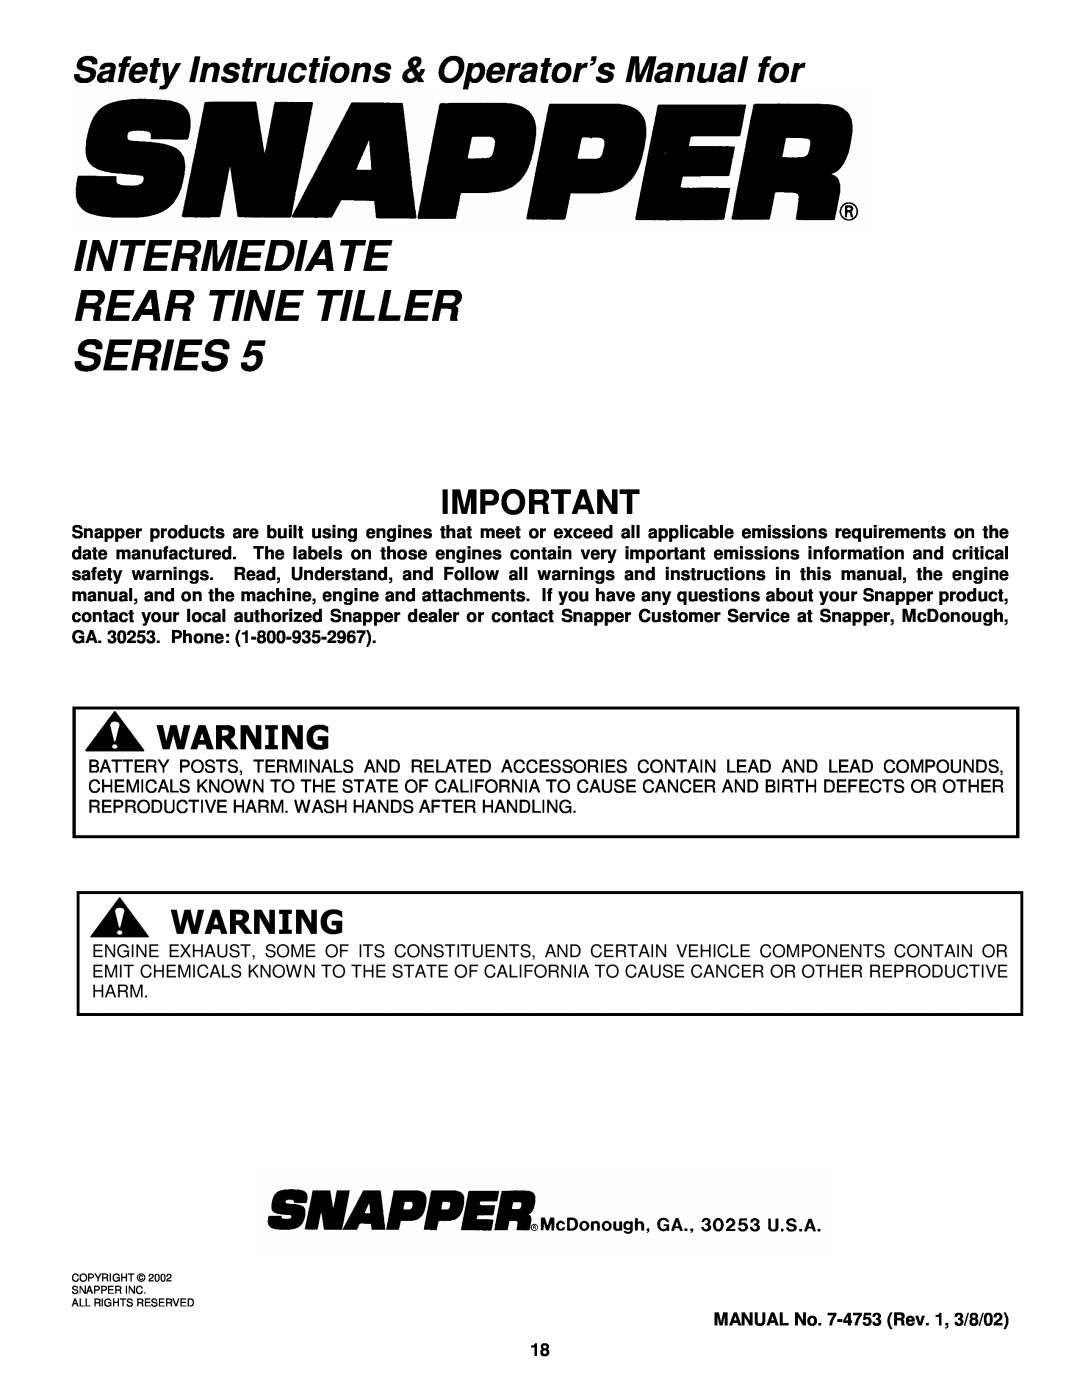 Snapper ICFR7005BV, CICFR5505HV Intermediate Rear Tine Tiller Series, Safety Instructions & Operator’s Manual for 